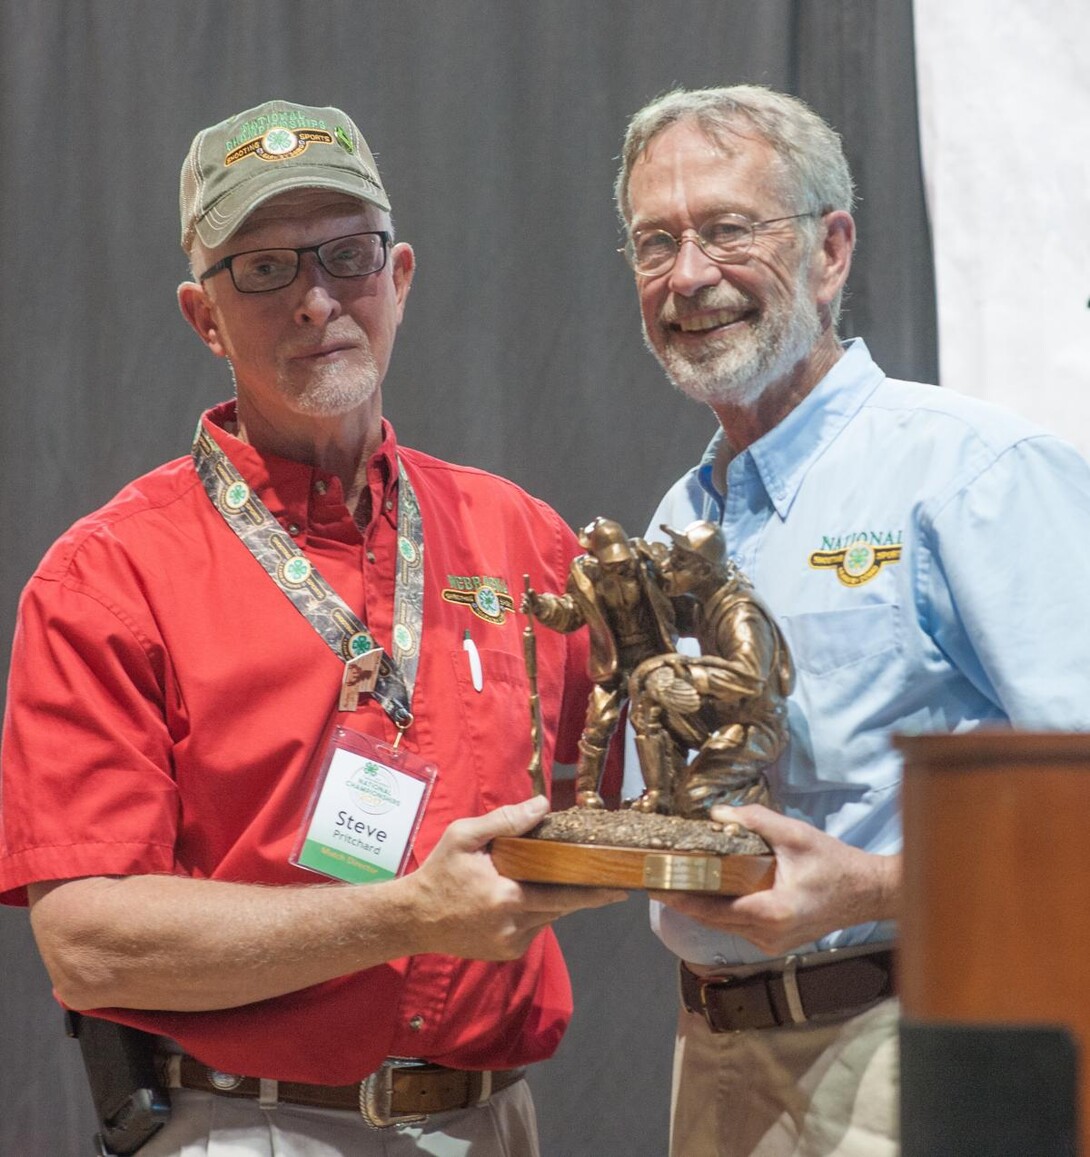 Nebraska’s Steve Pritchard (left) accepts a leadership award from Conrad Arnold, national 4-H shooting sports program coordinator.